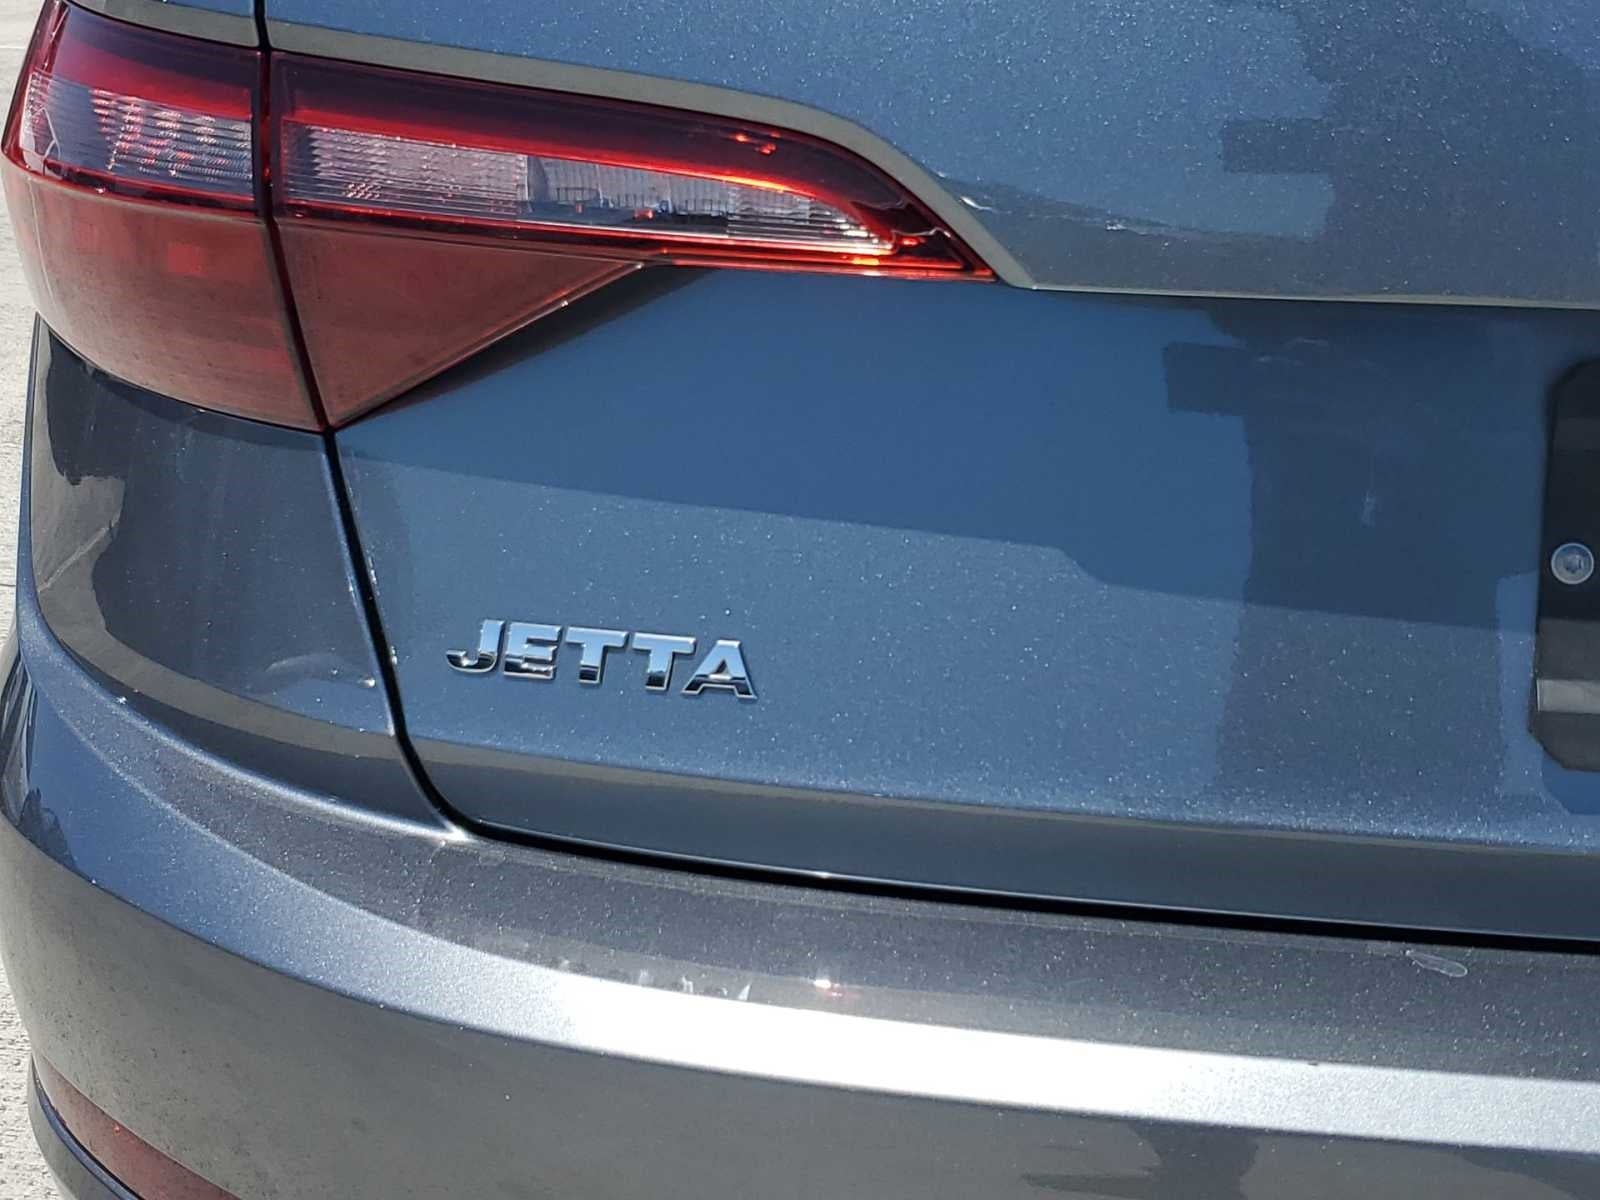 2021 Volkswagen Jetta SE